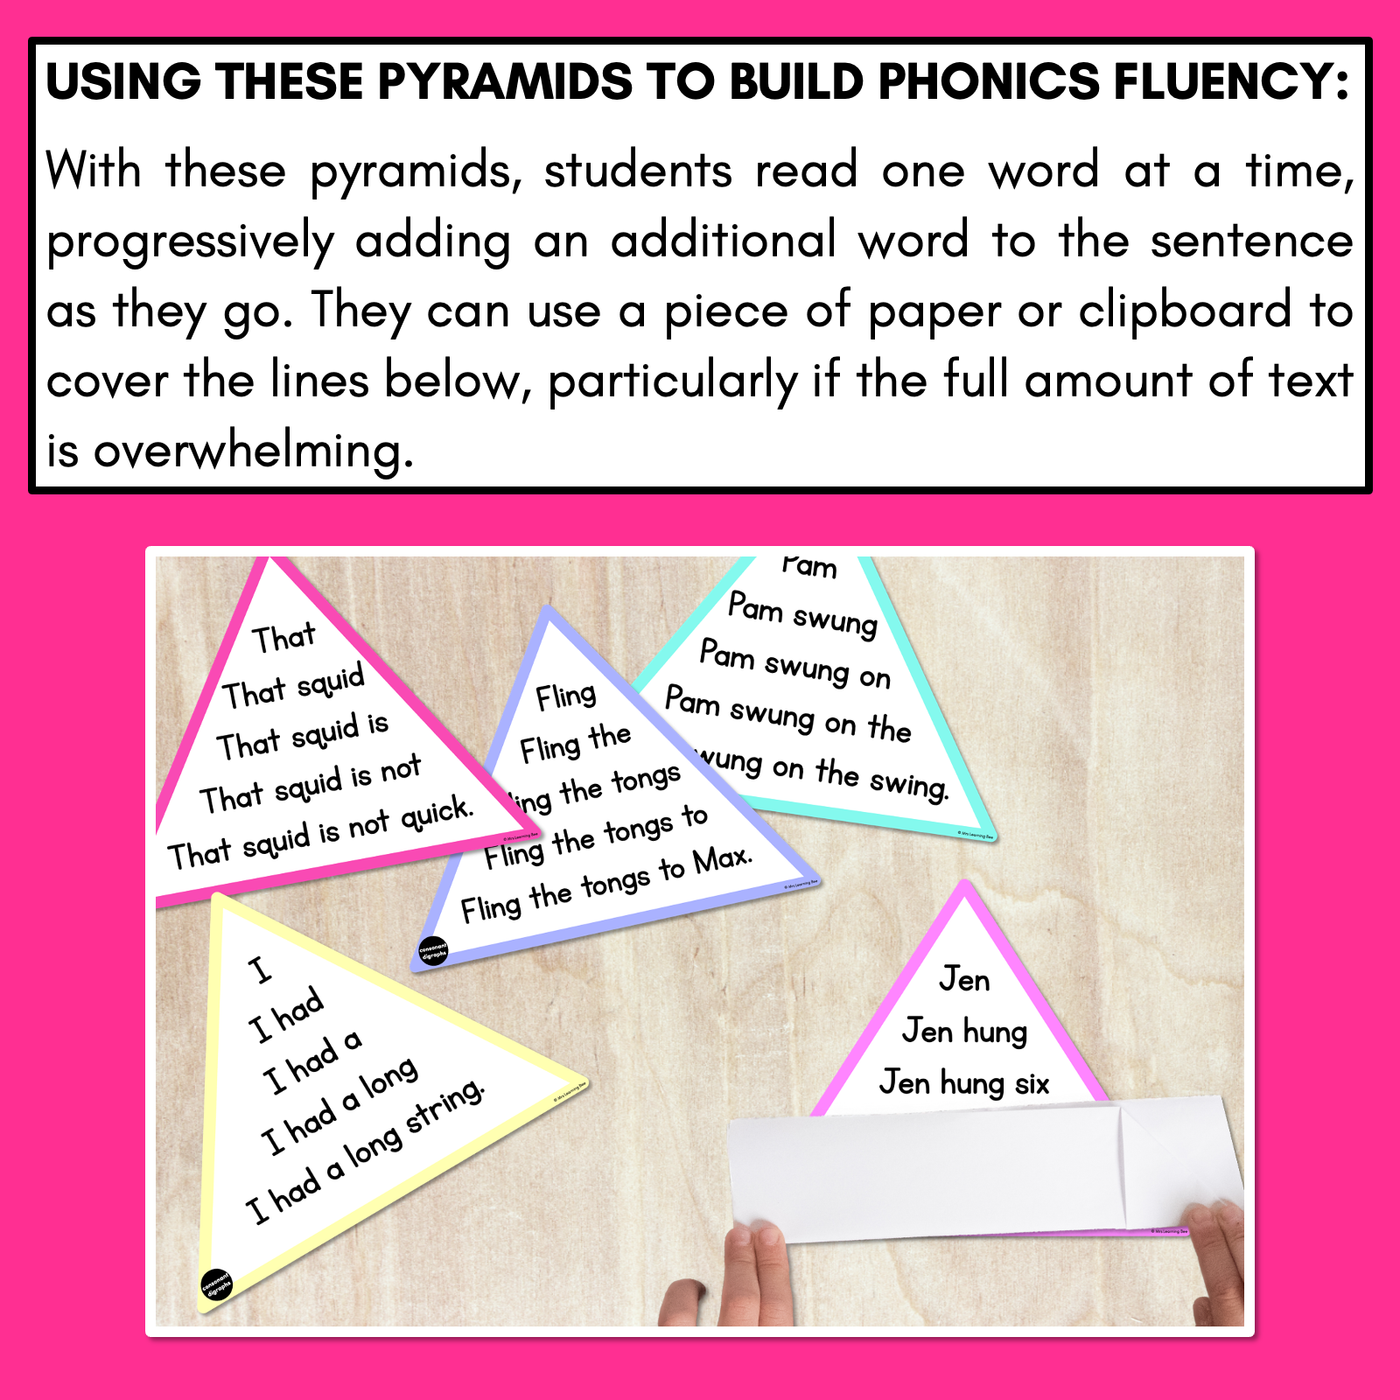 QU NG + X WORDS - Decodable Sentences Pyramids - Phonics Fluency